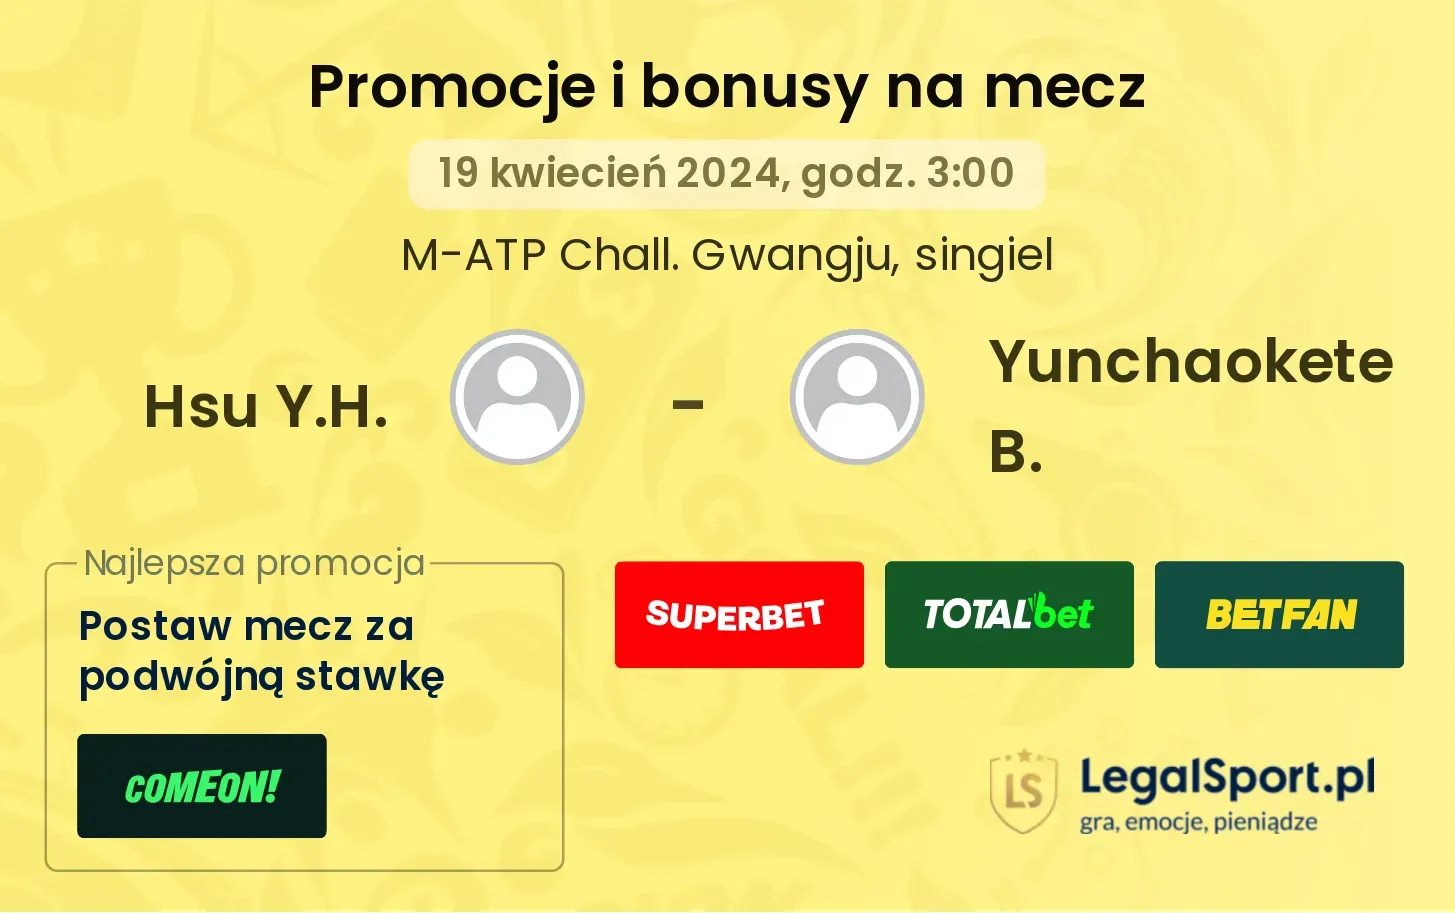 Hsu Y.H. - Yunchaokete B. promocje bonusy na mecz